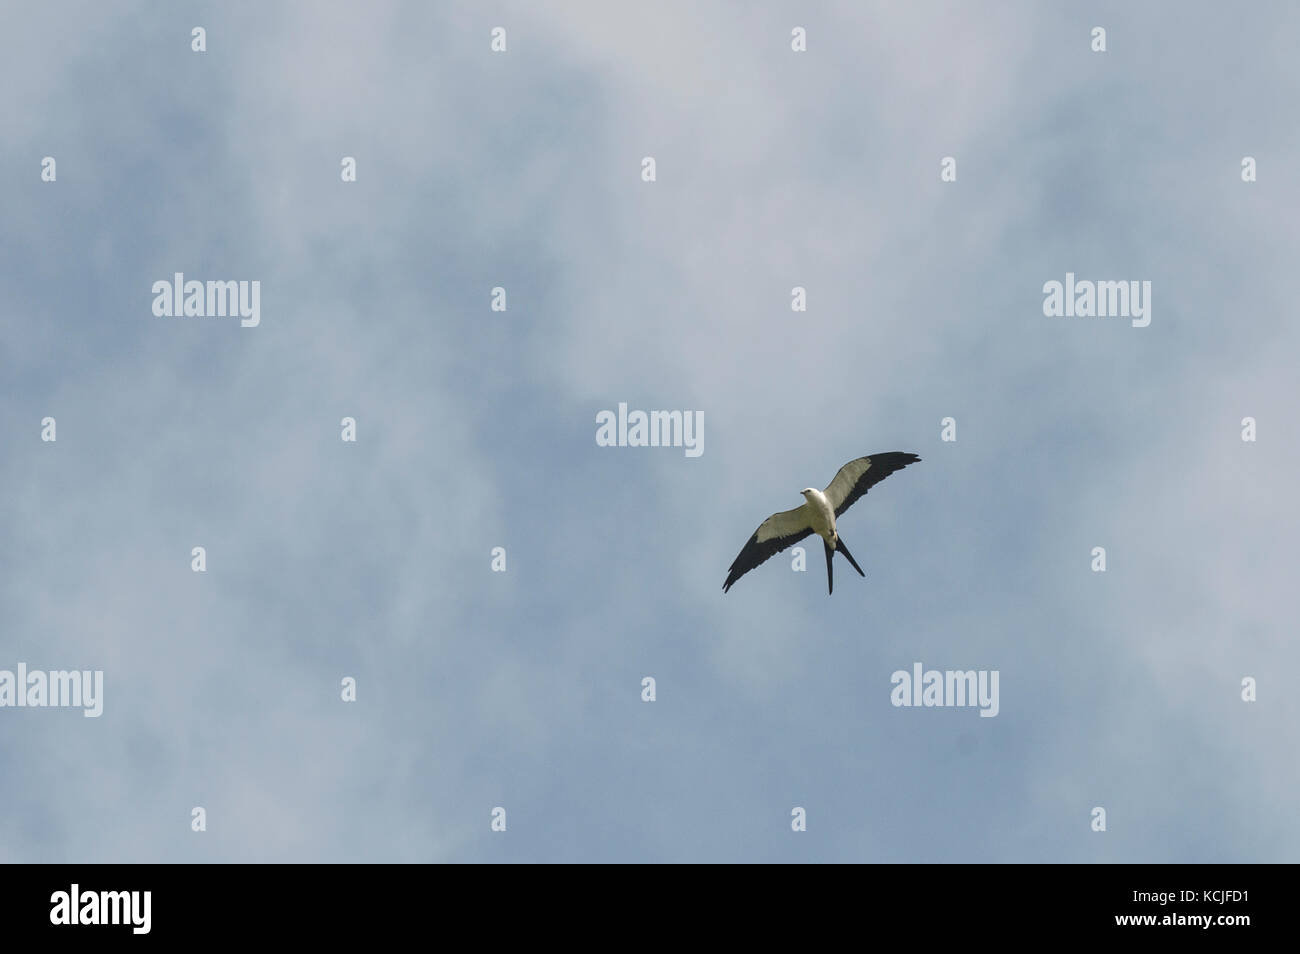 Cometa cola de golondrina fotografías e imágenes de alta resolución - Alamy